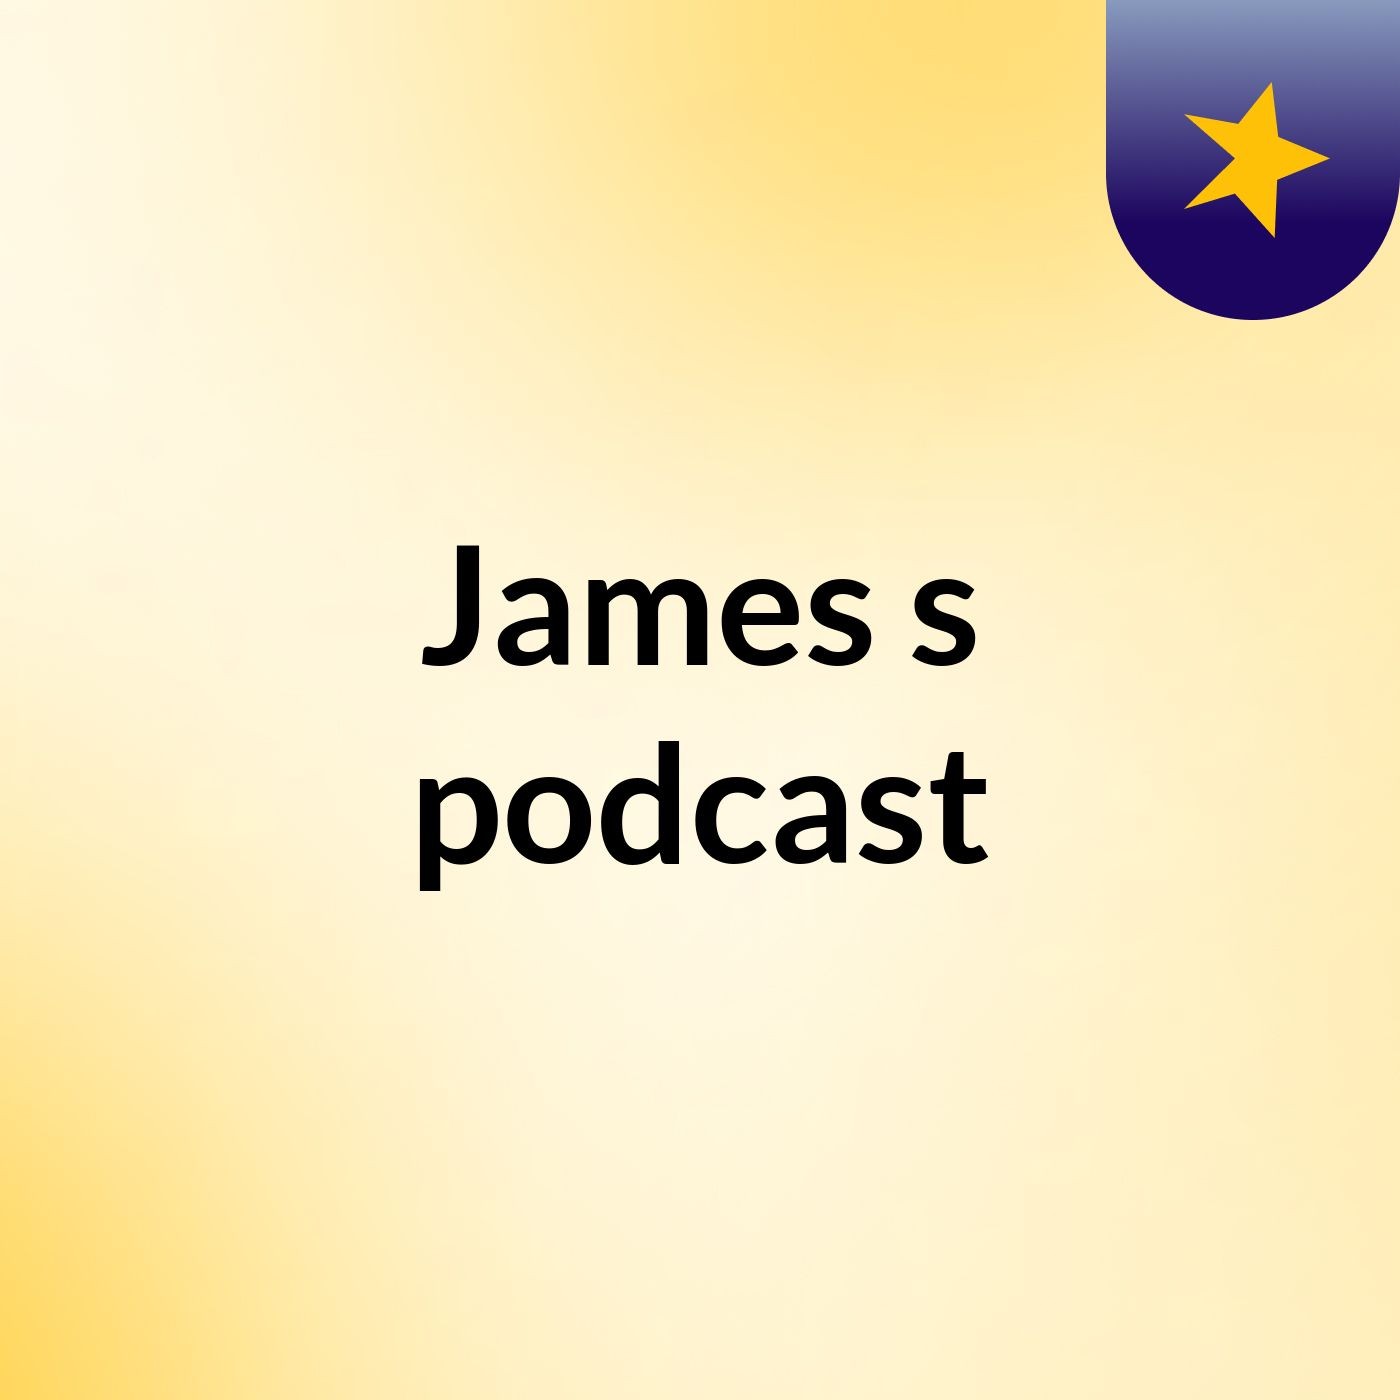 Episode 1 - James's podcast